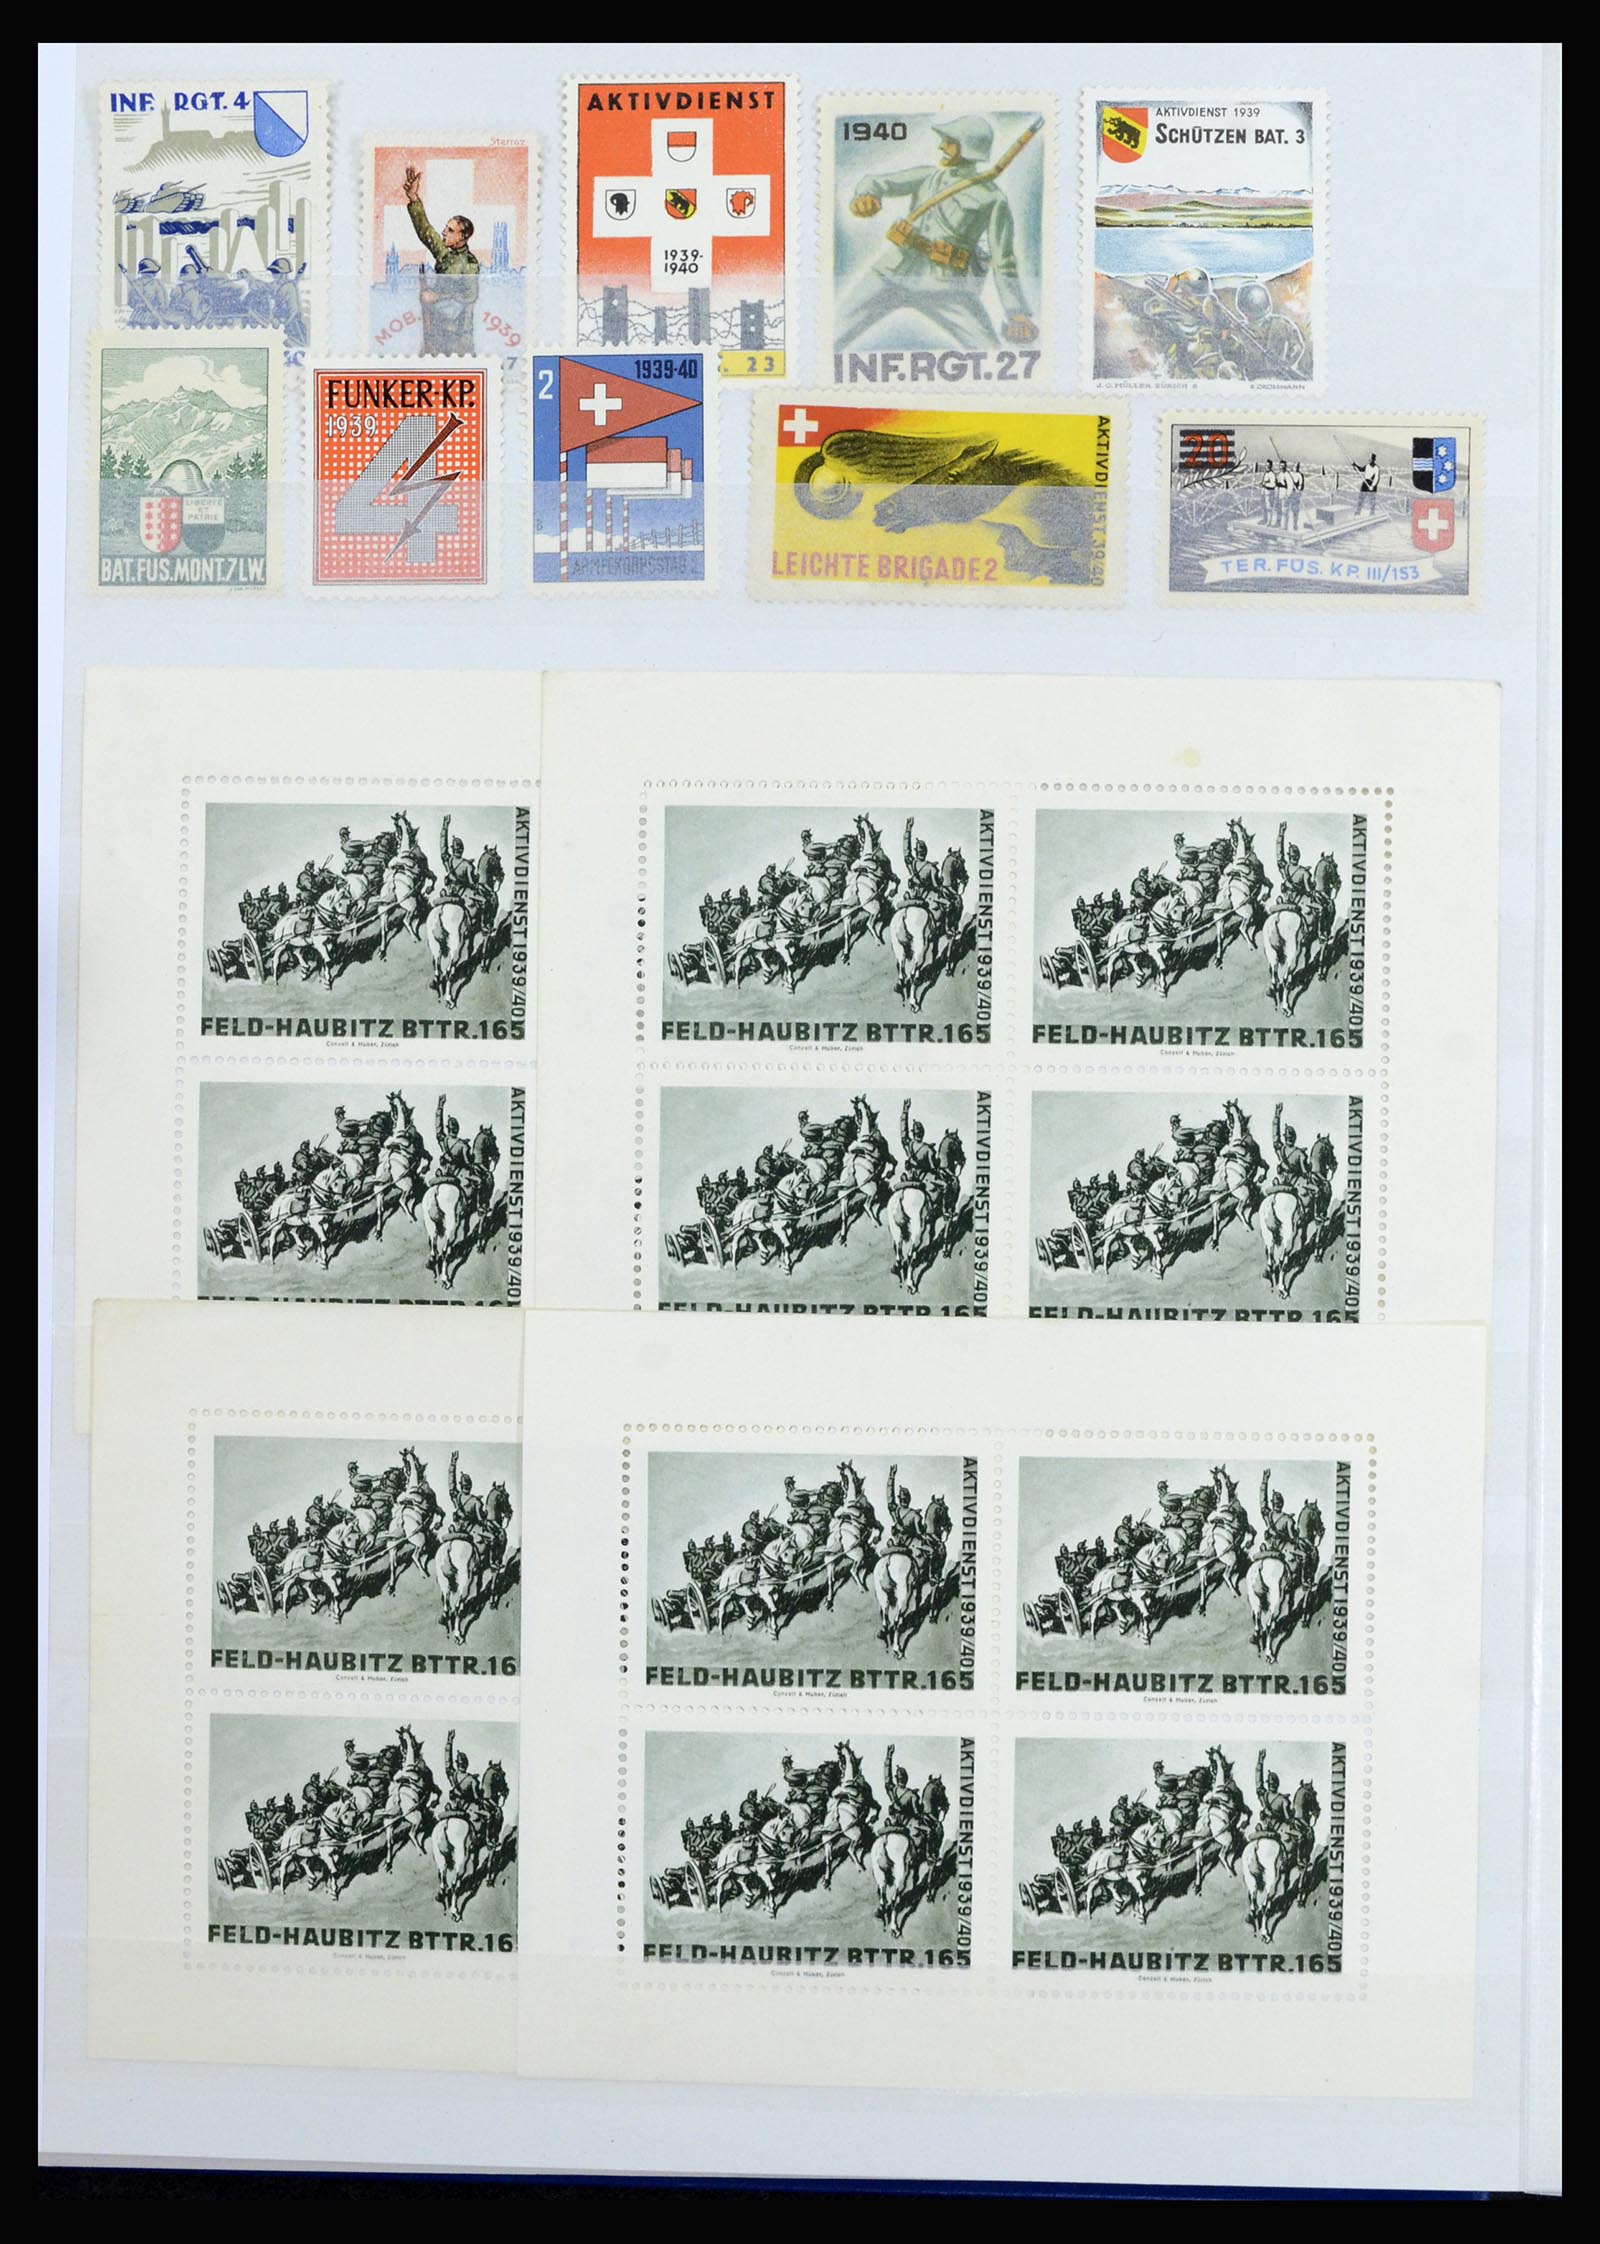 37149 012 - Stamp collection 37149 Switzerland soldier stamps 1914-1945.